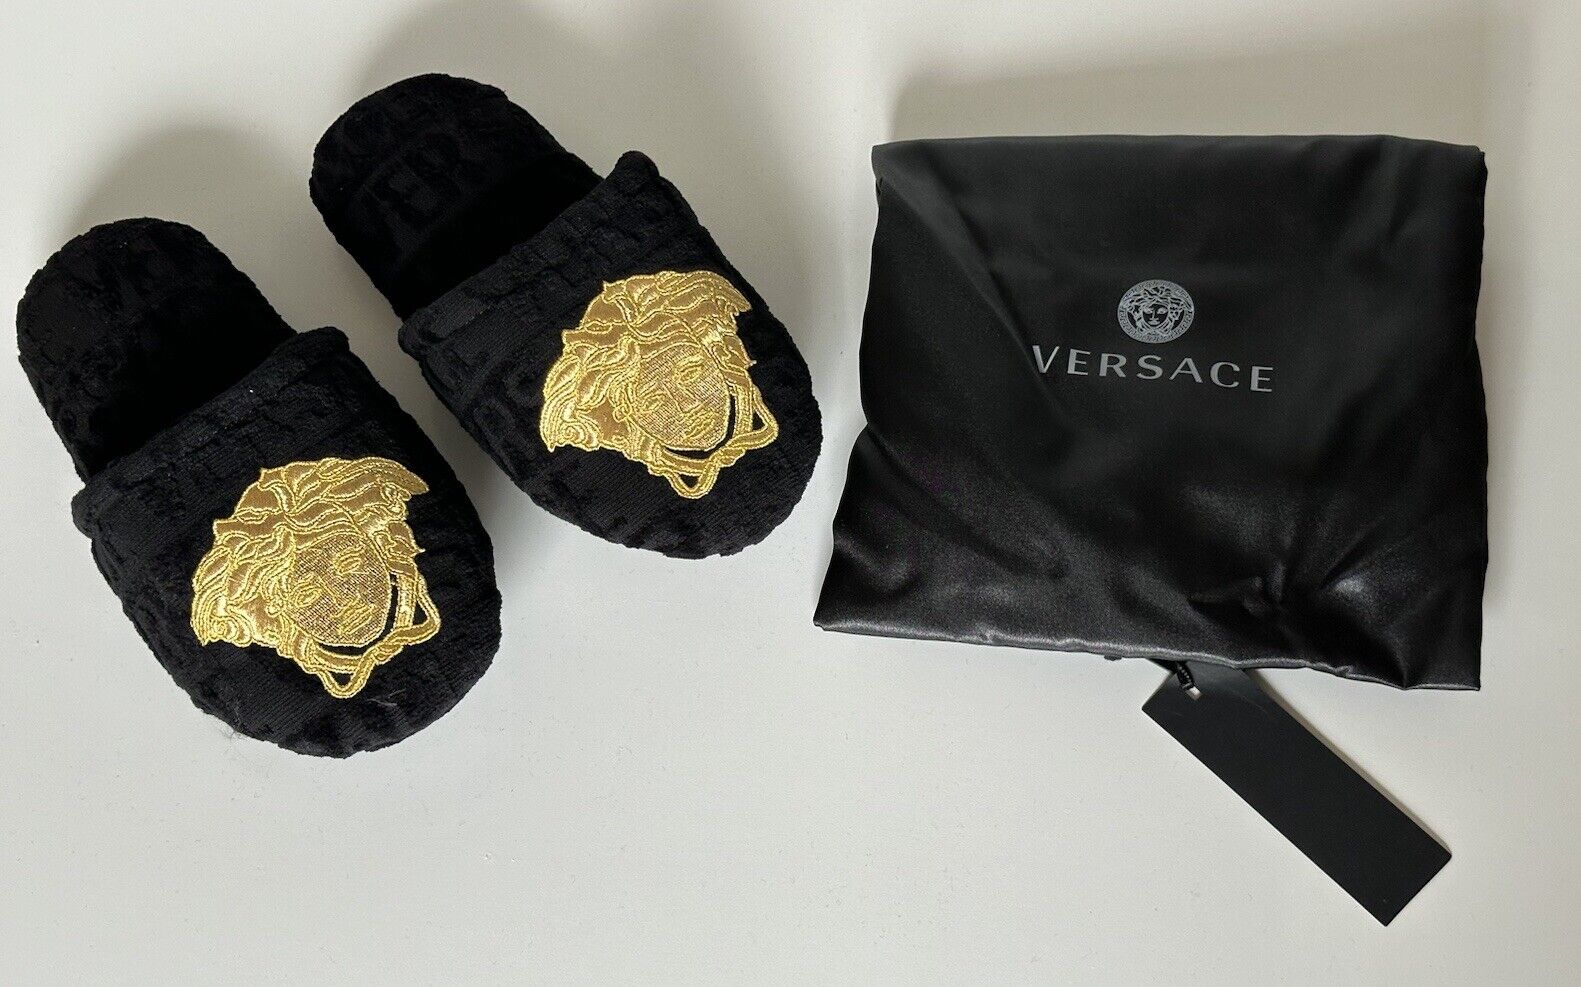 Versace Medusa Head Women’s Bath Slippers Black Small ZSLB00004 Italy NWT $250